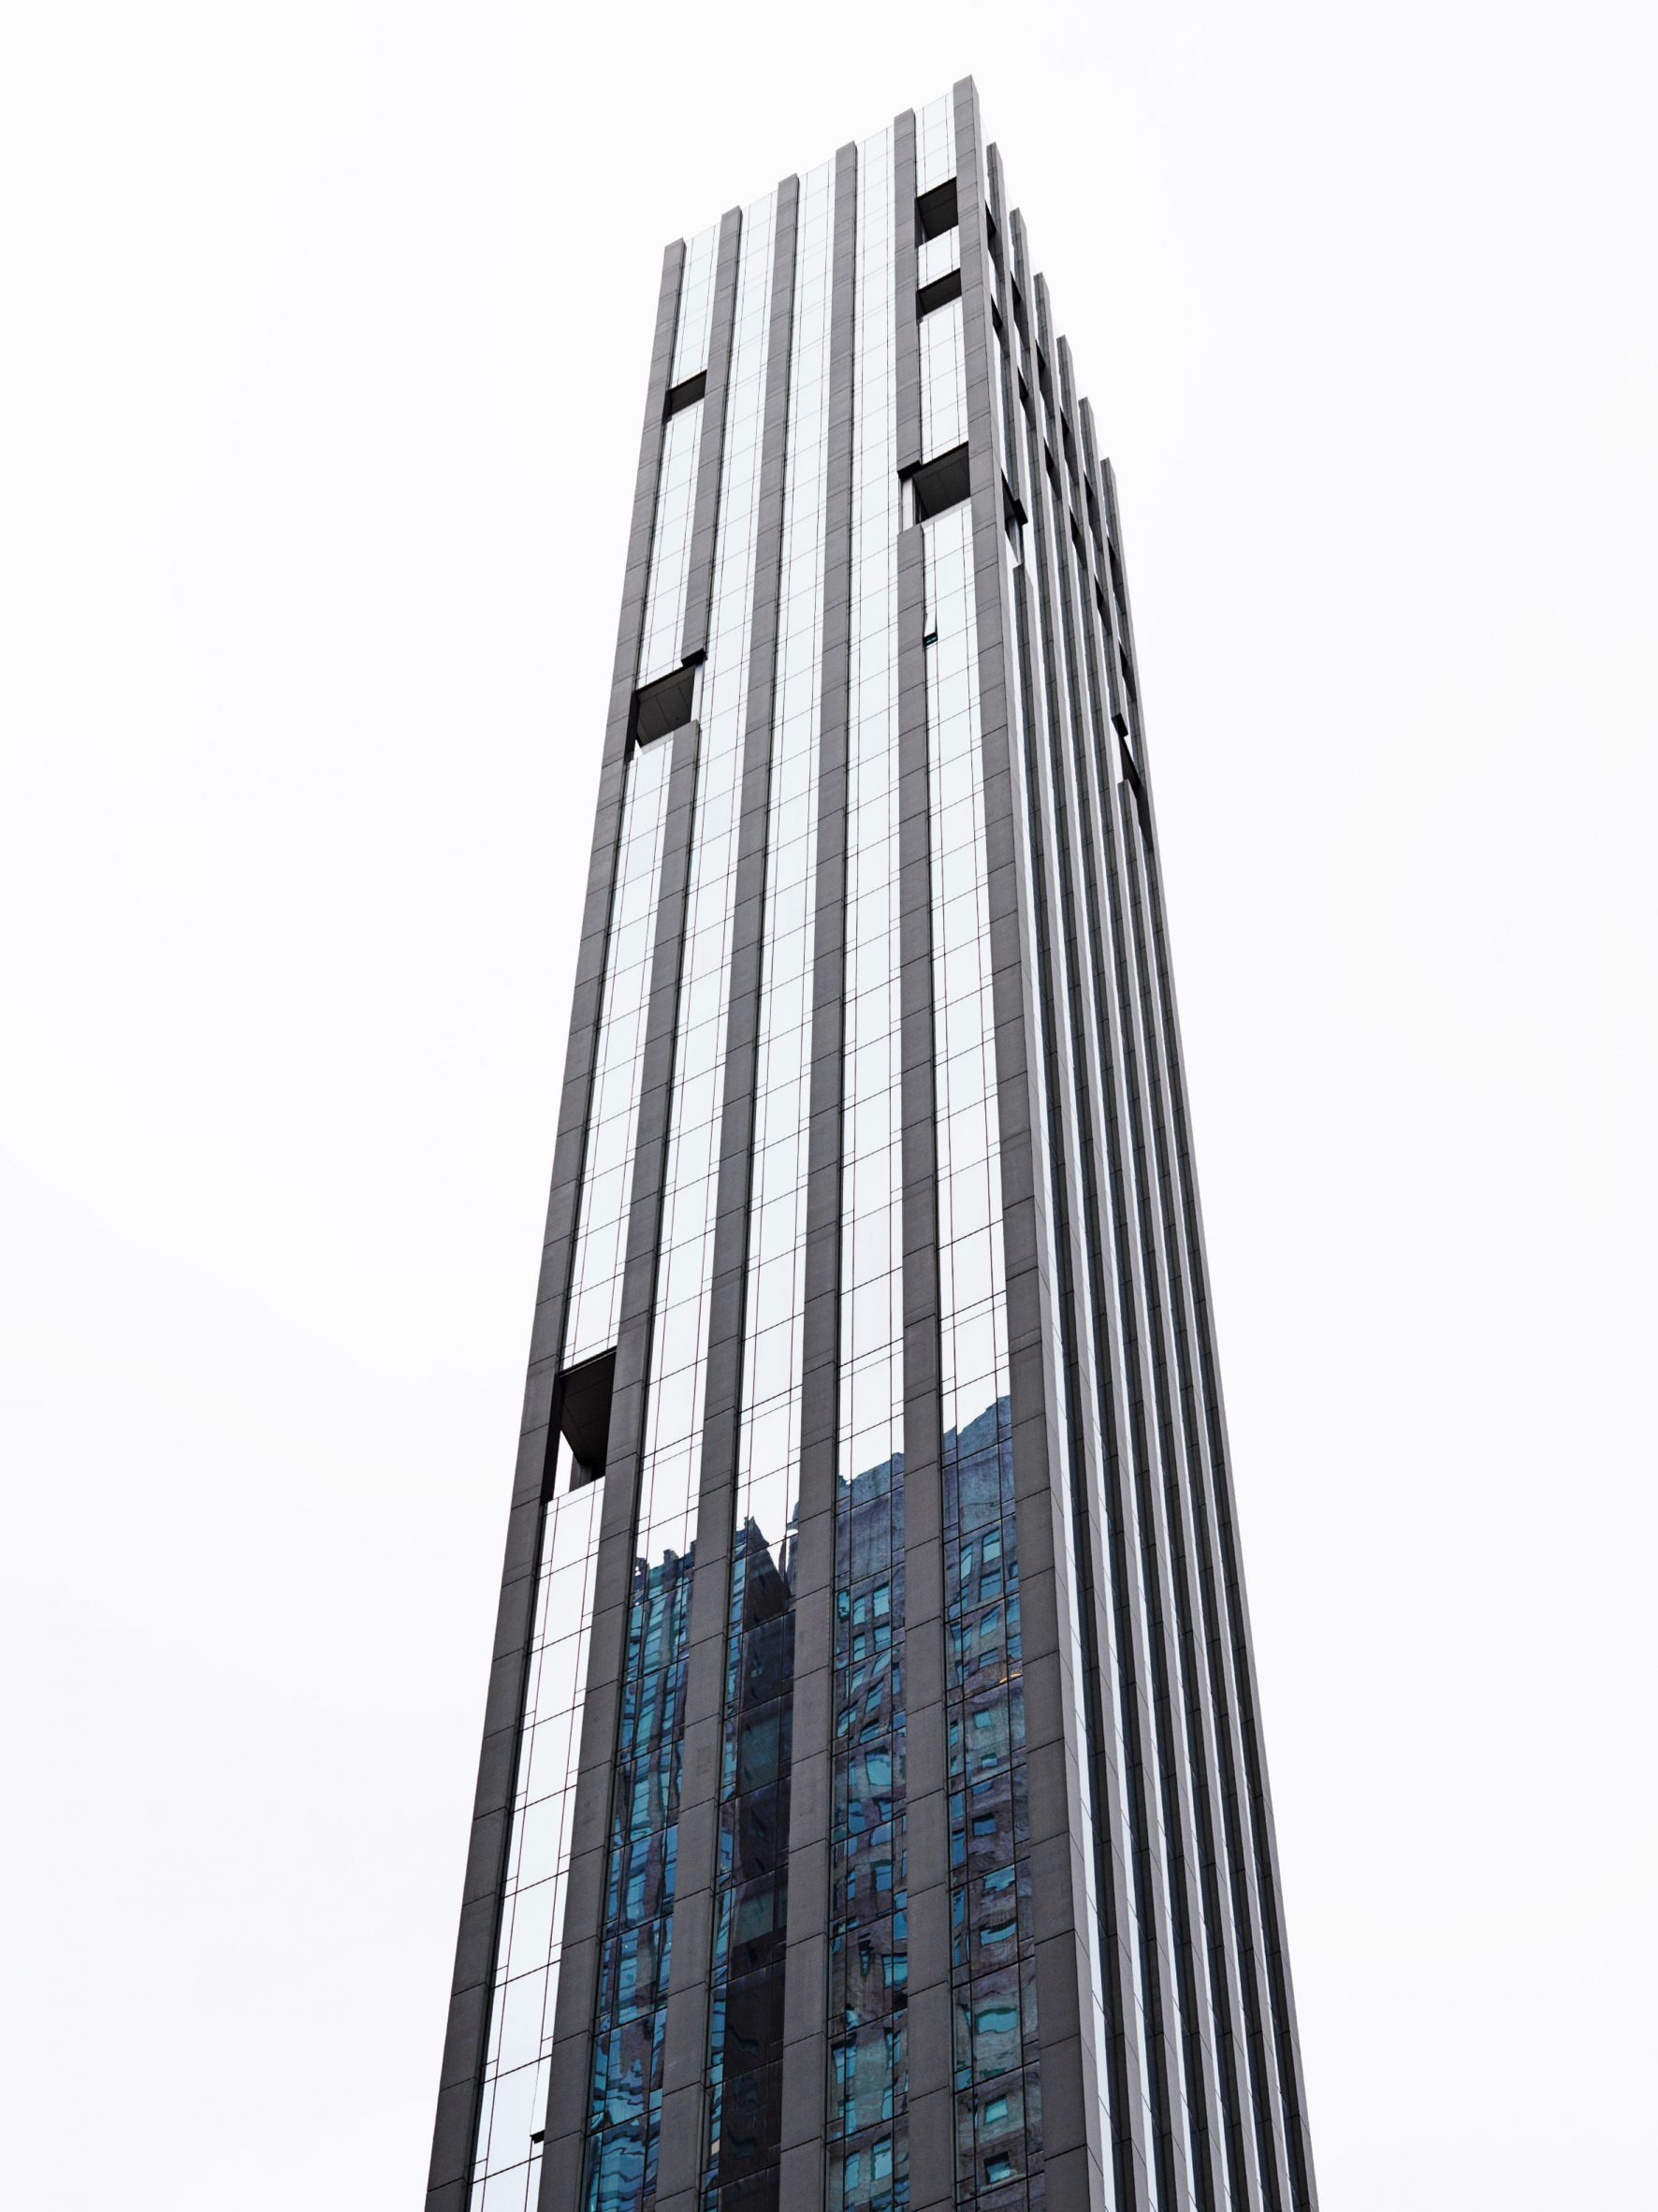 Glass-fibre-reinforced concrete panels by Rieder on 277 Fifth Avenue 